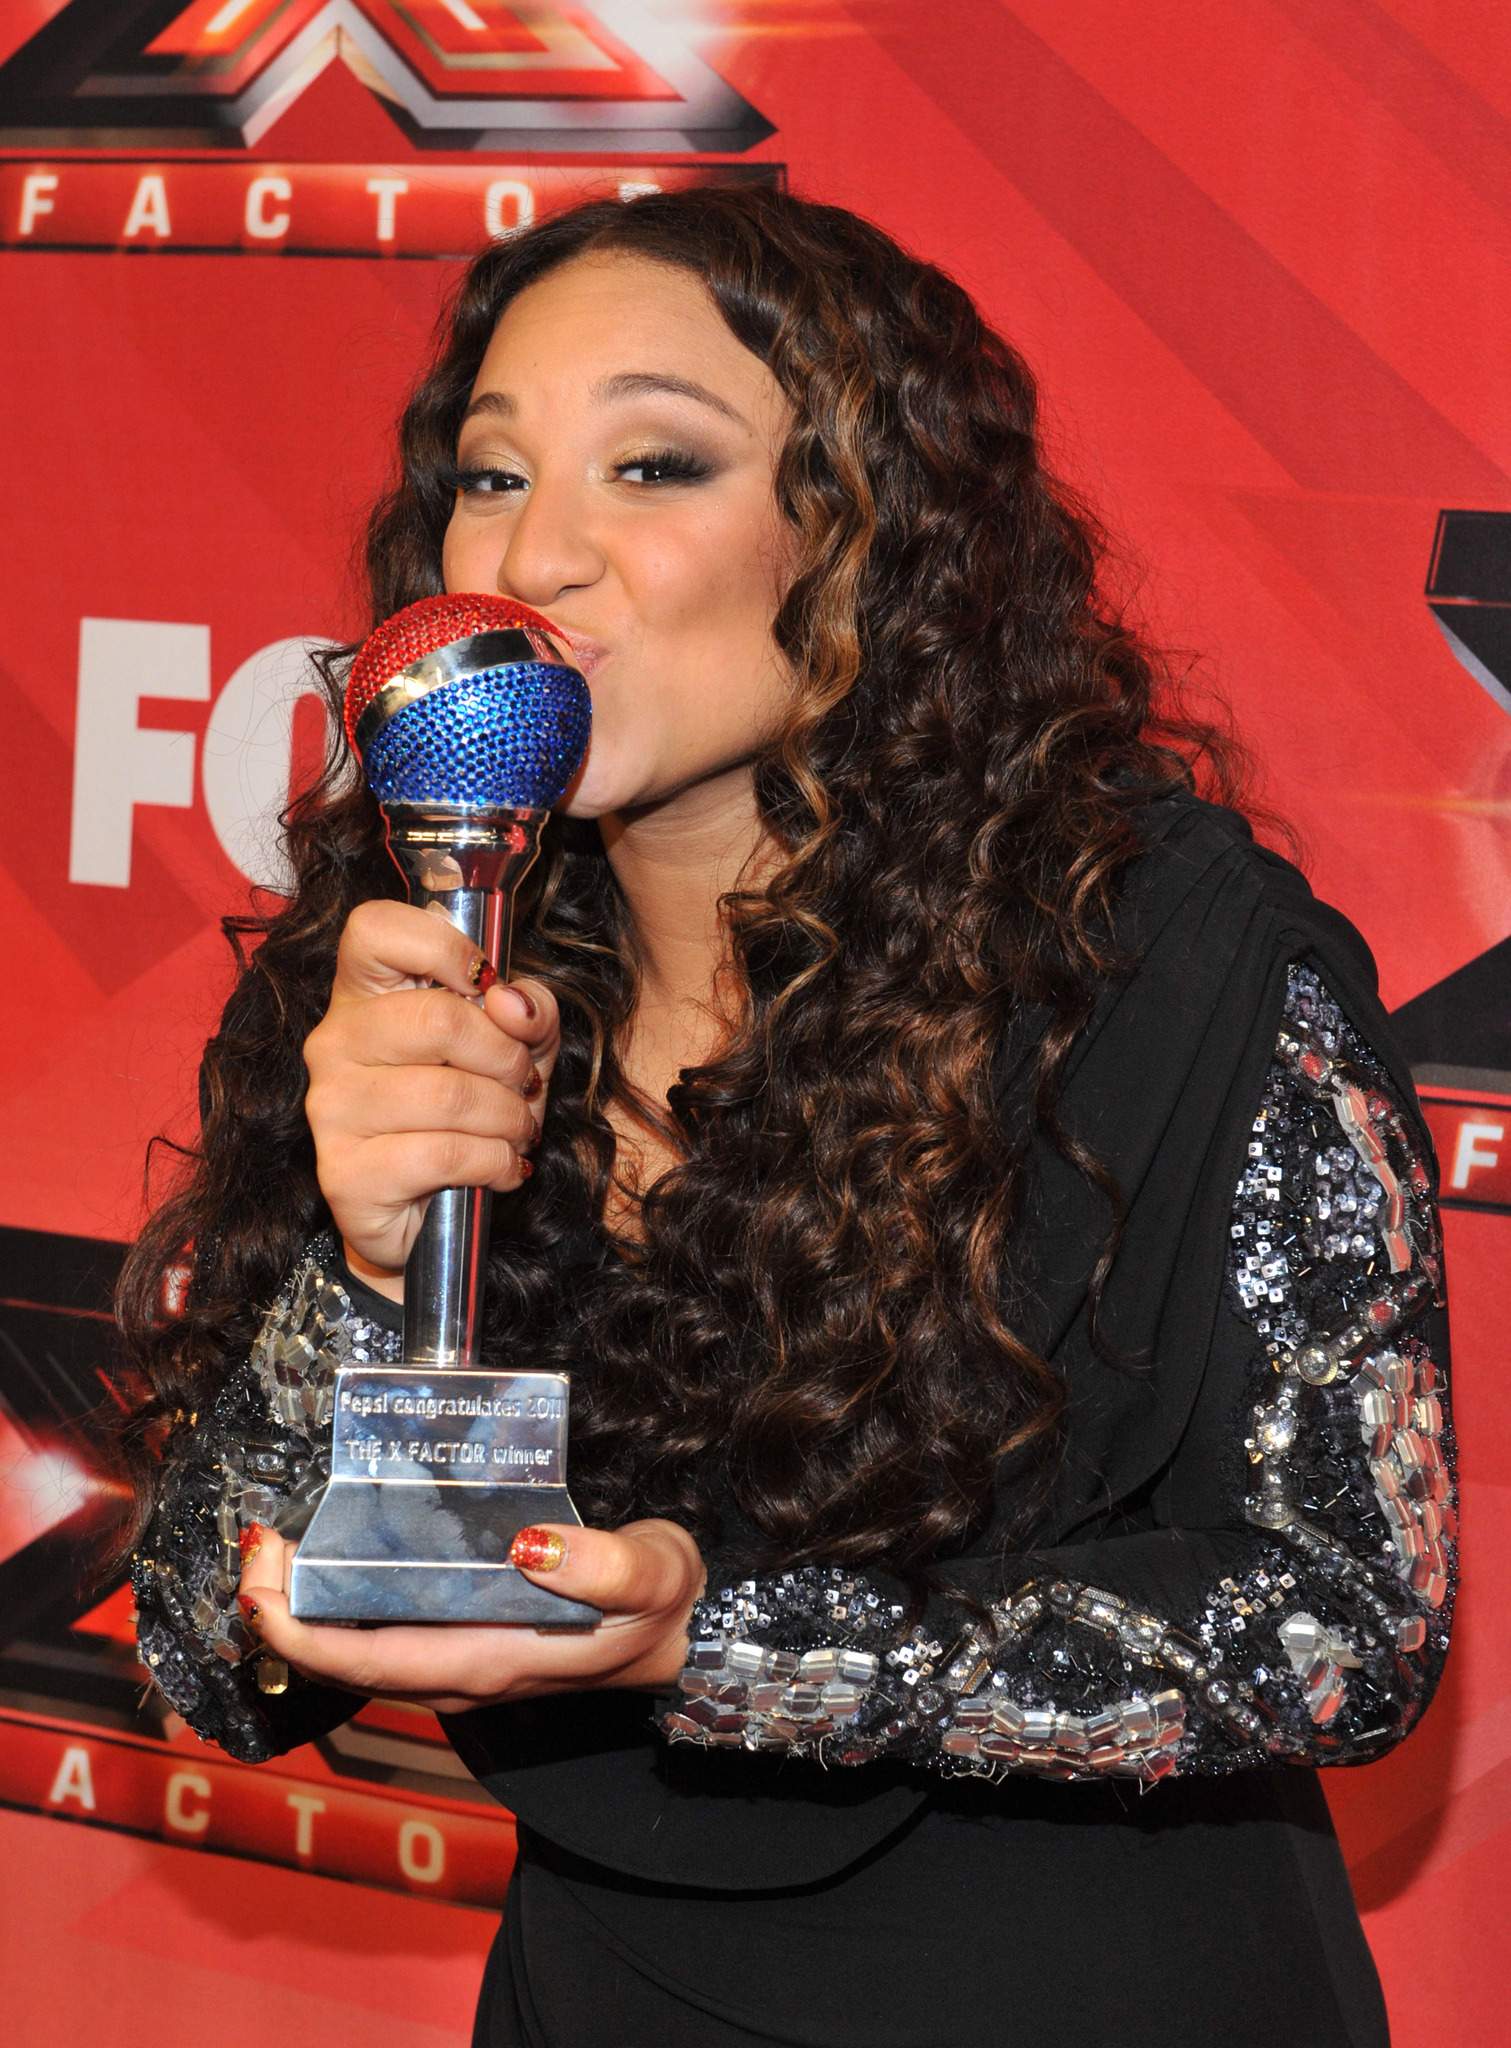 Melanie Amaro at event of The X Factor (2011)